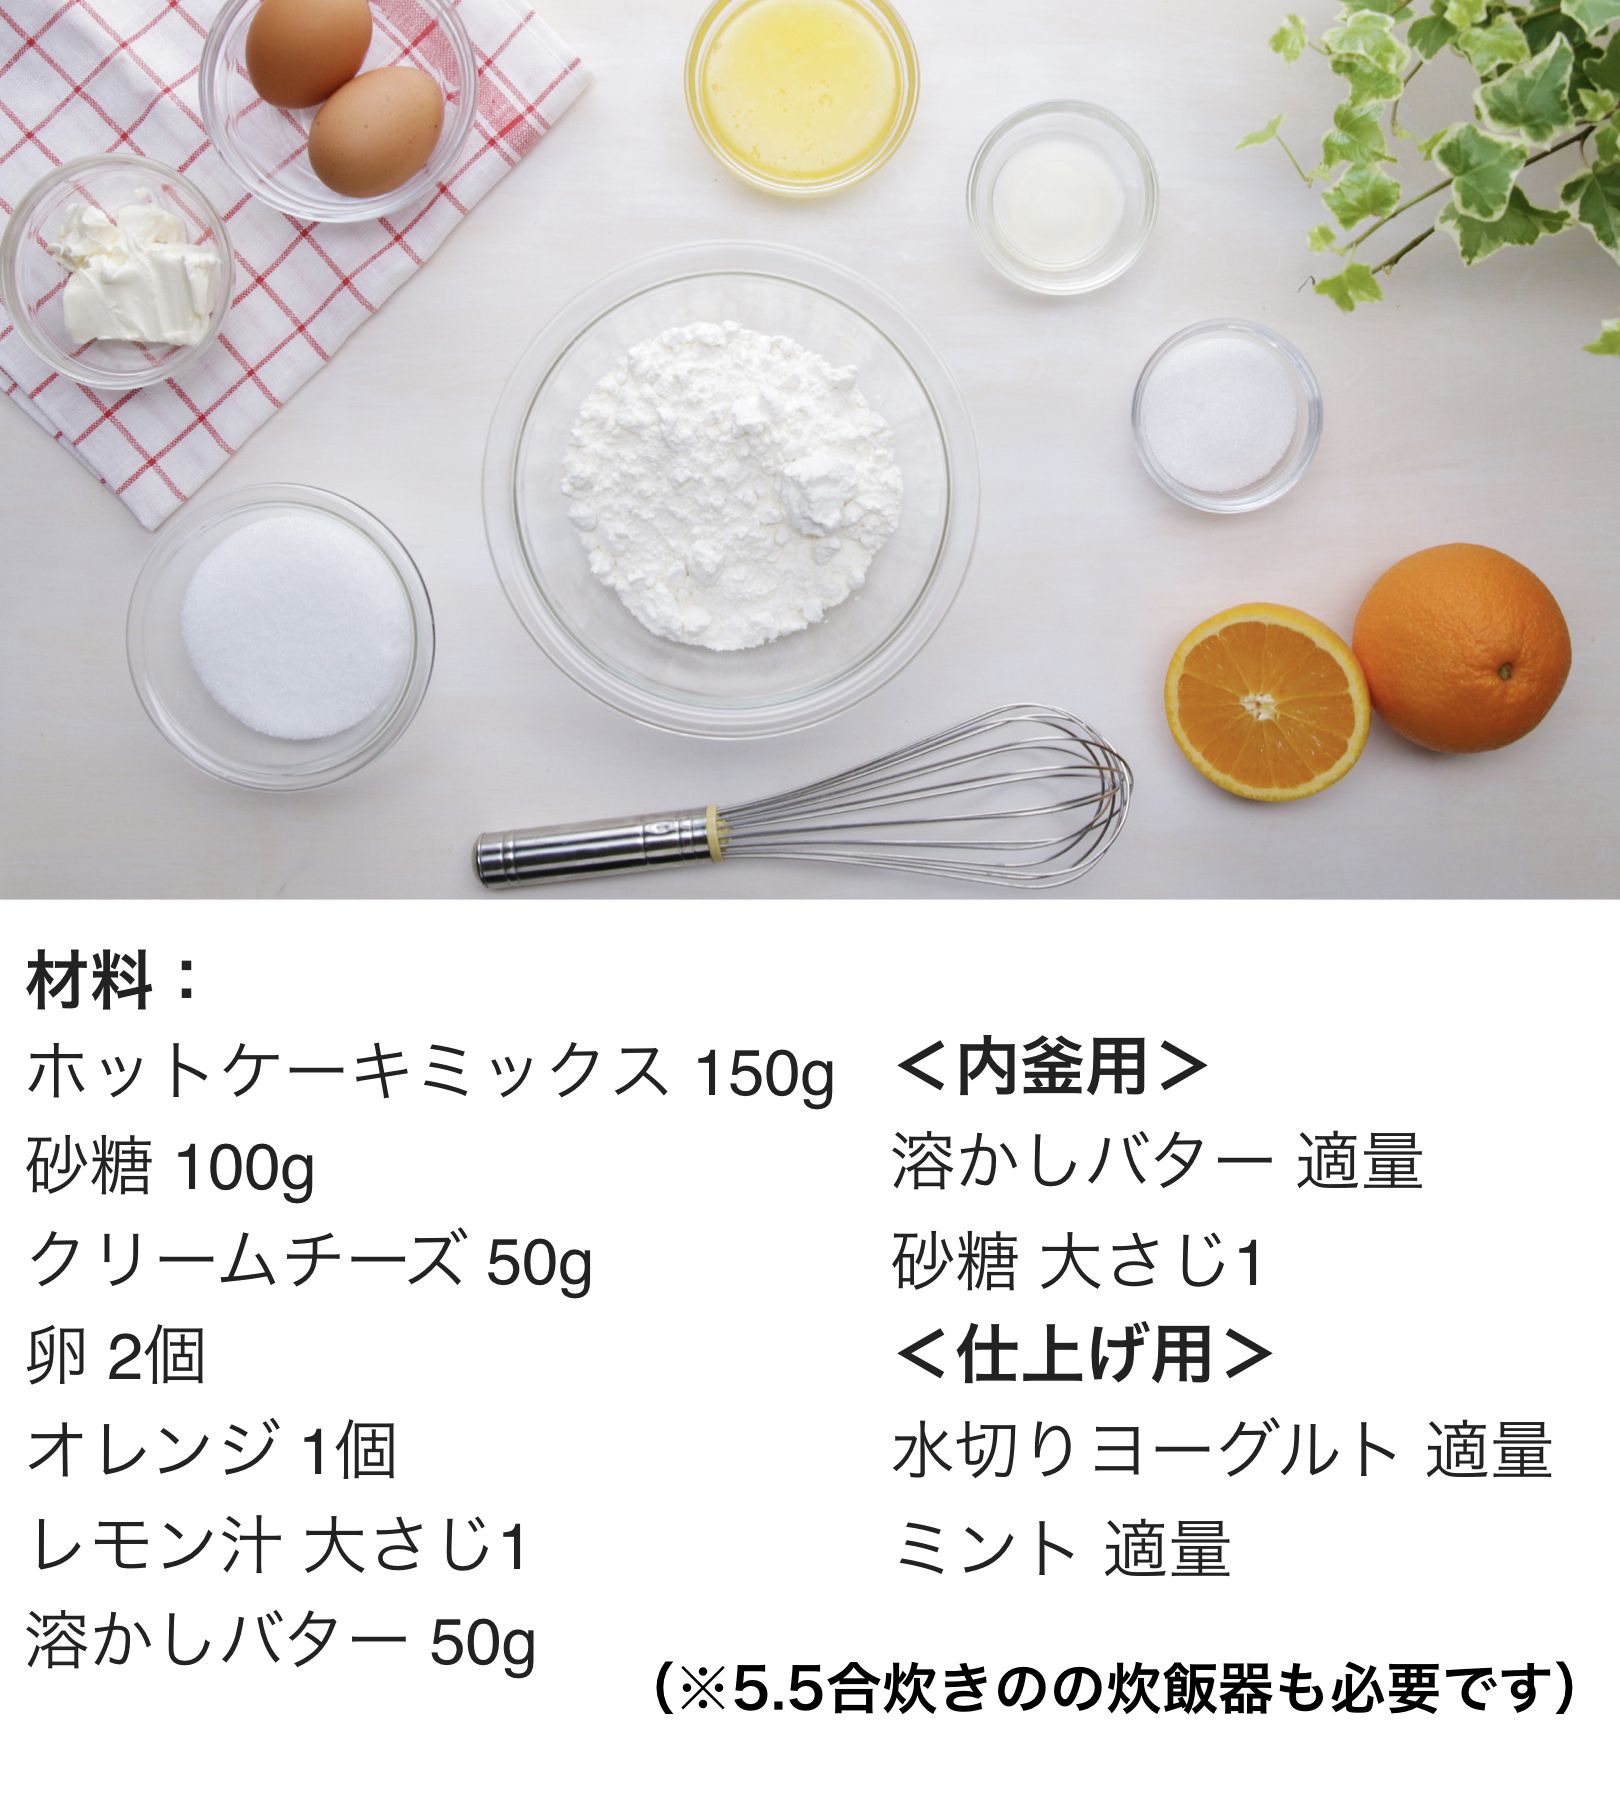 Buzzfeed Kawaii 炊飯器で簡単に作れるオレンジチーズケーキのレシピです T Co Rymnvtddi4